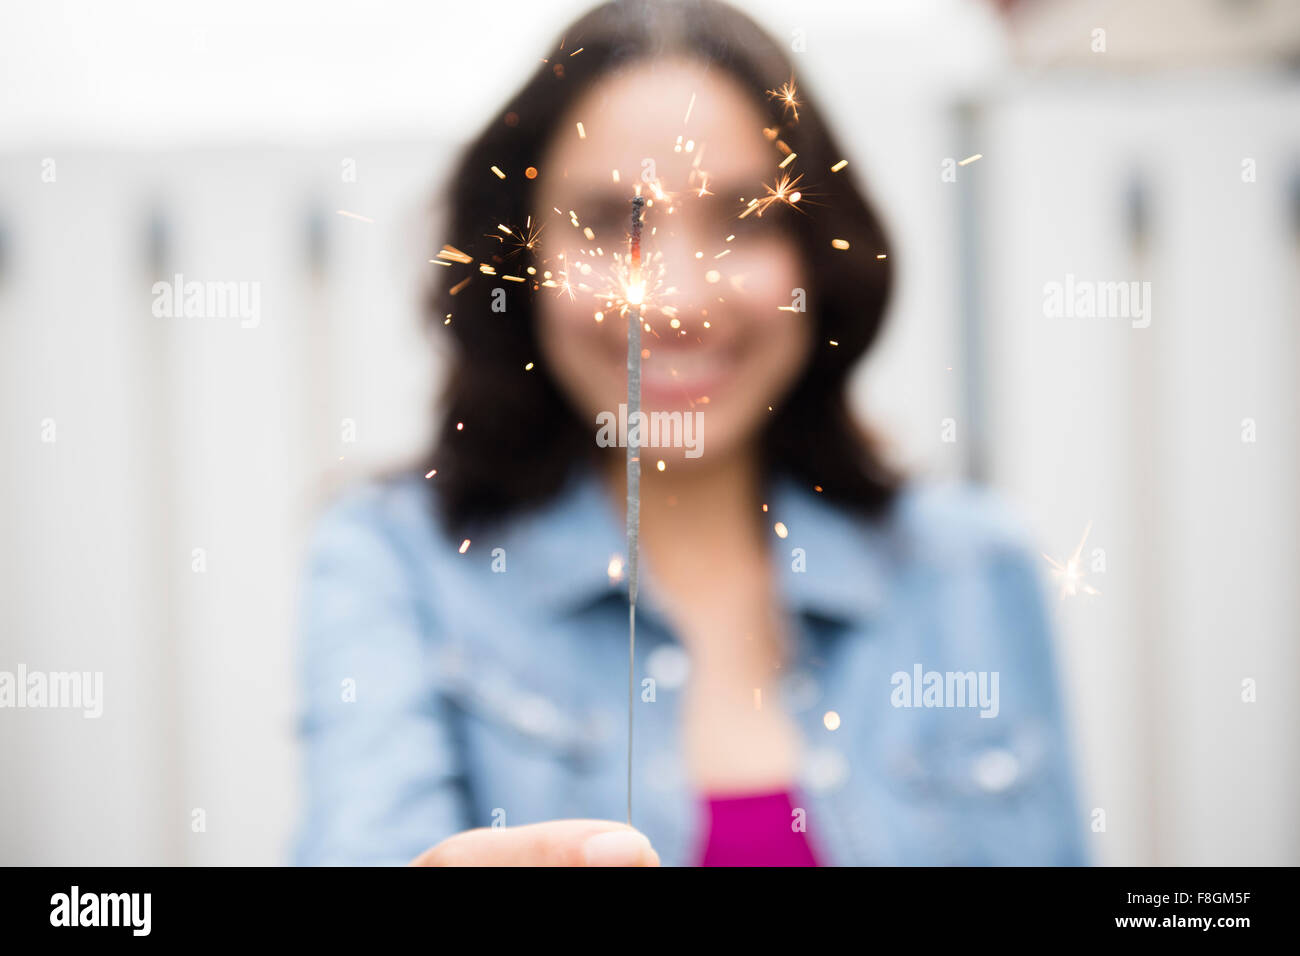 Hispanic woman holding sparkler Stock Photo